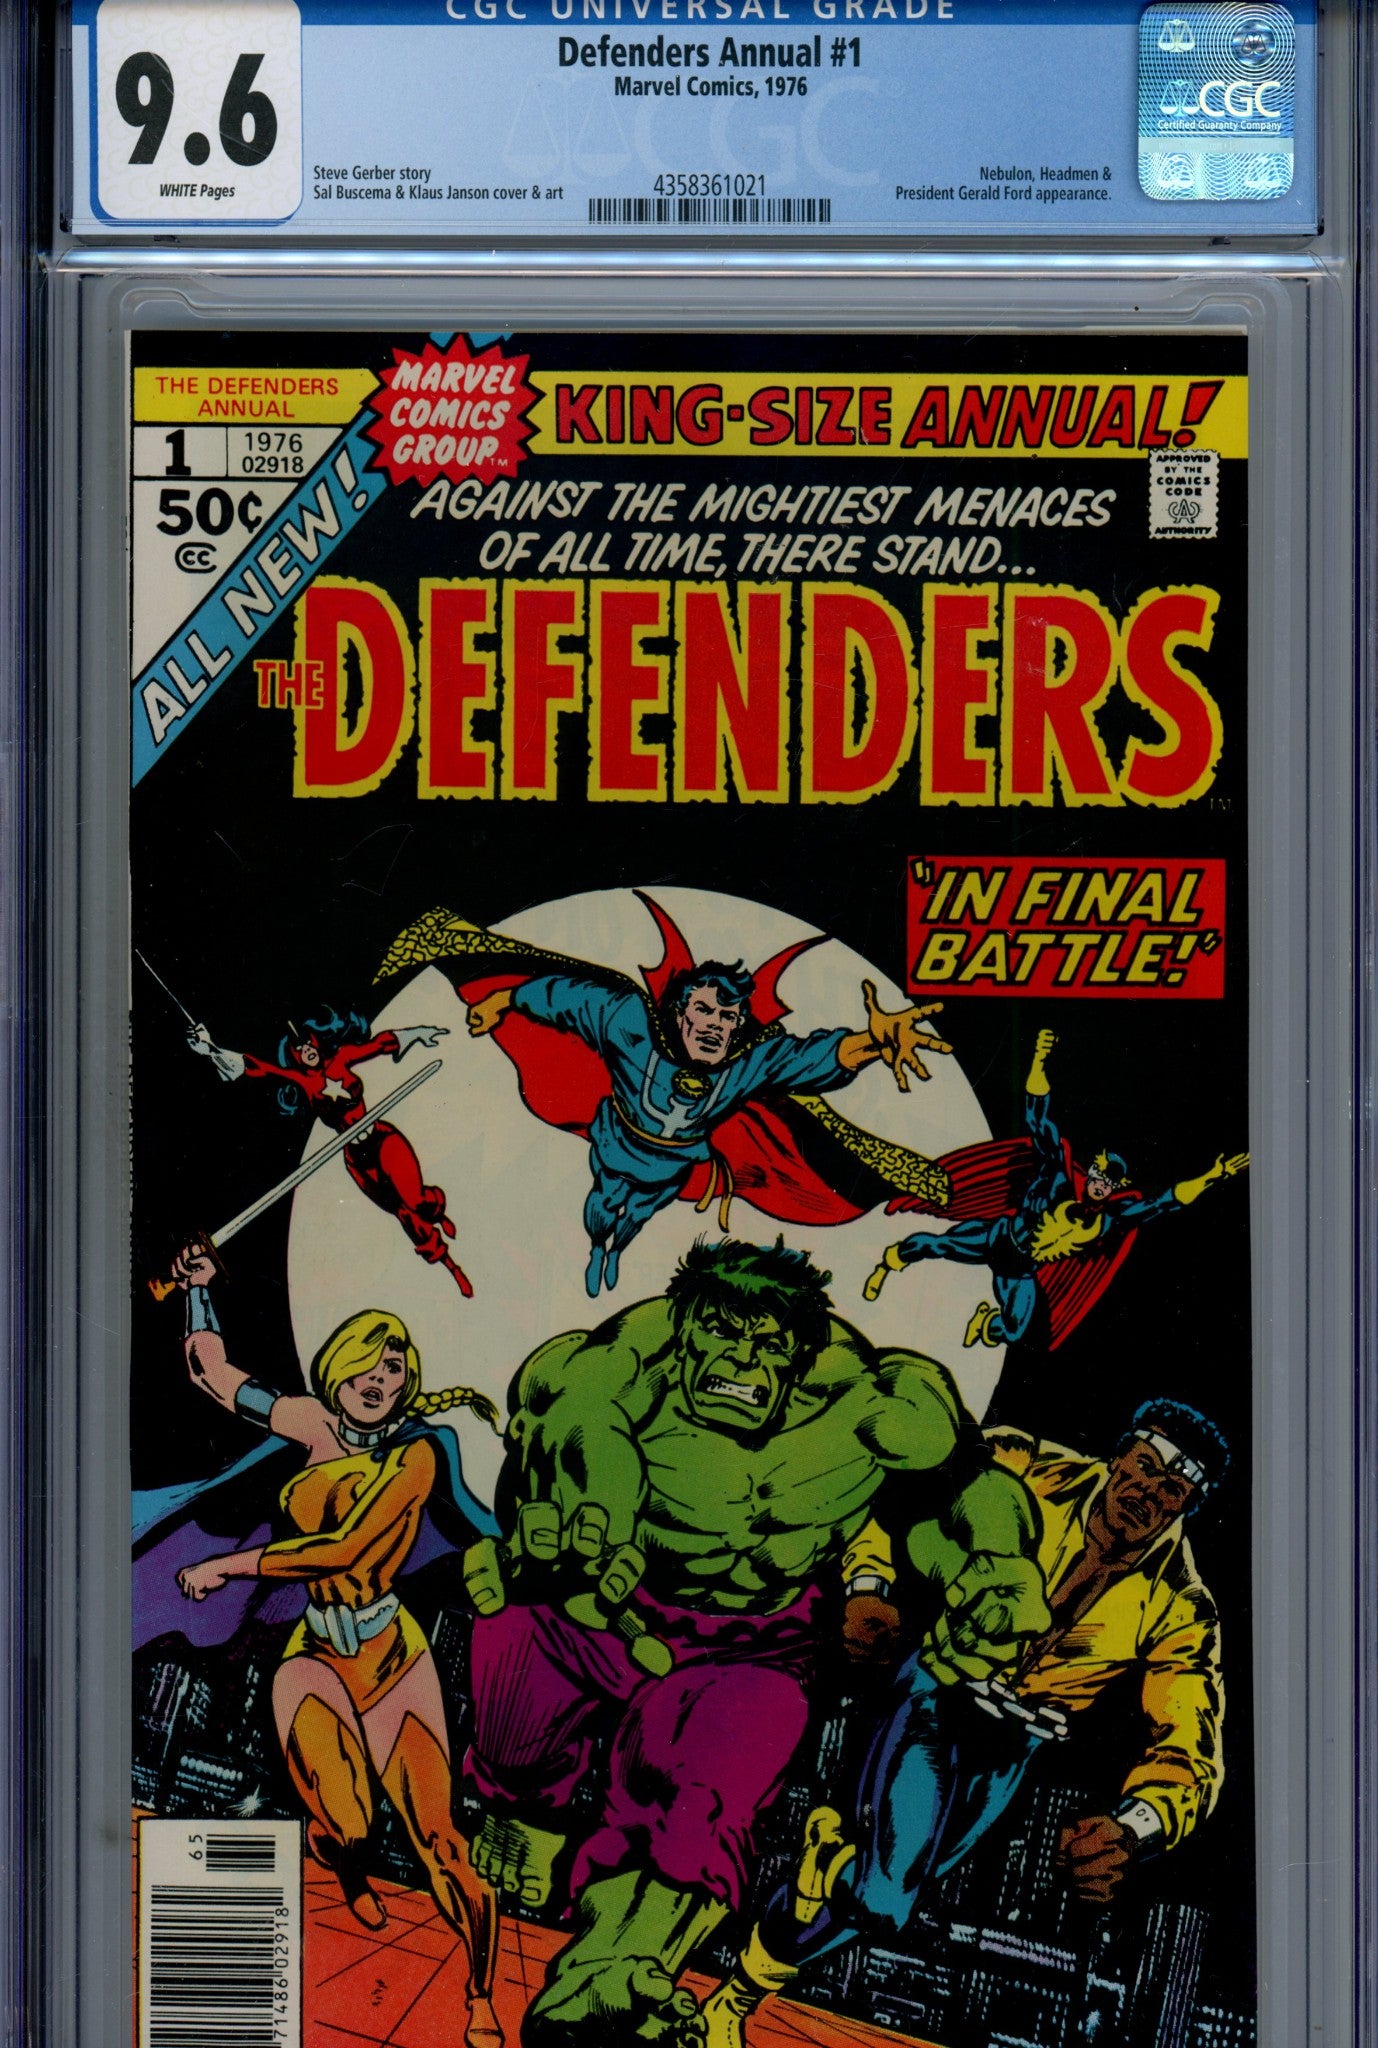 The Defenders Annual Vol 1 1 CGC 9.6 (NM+) (1976) 